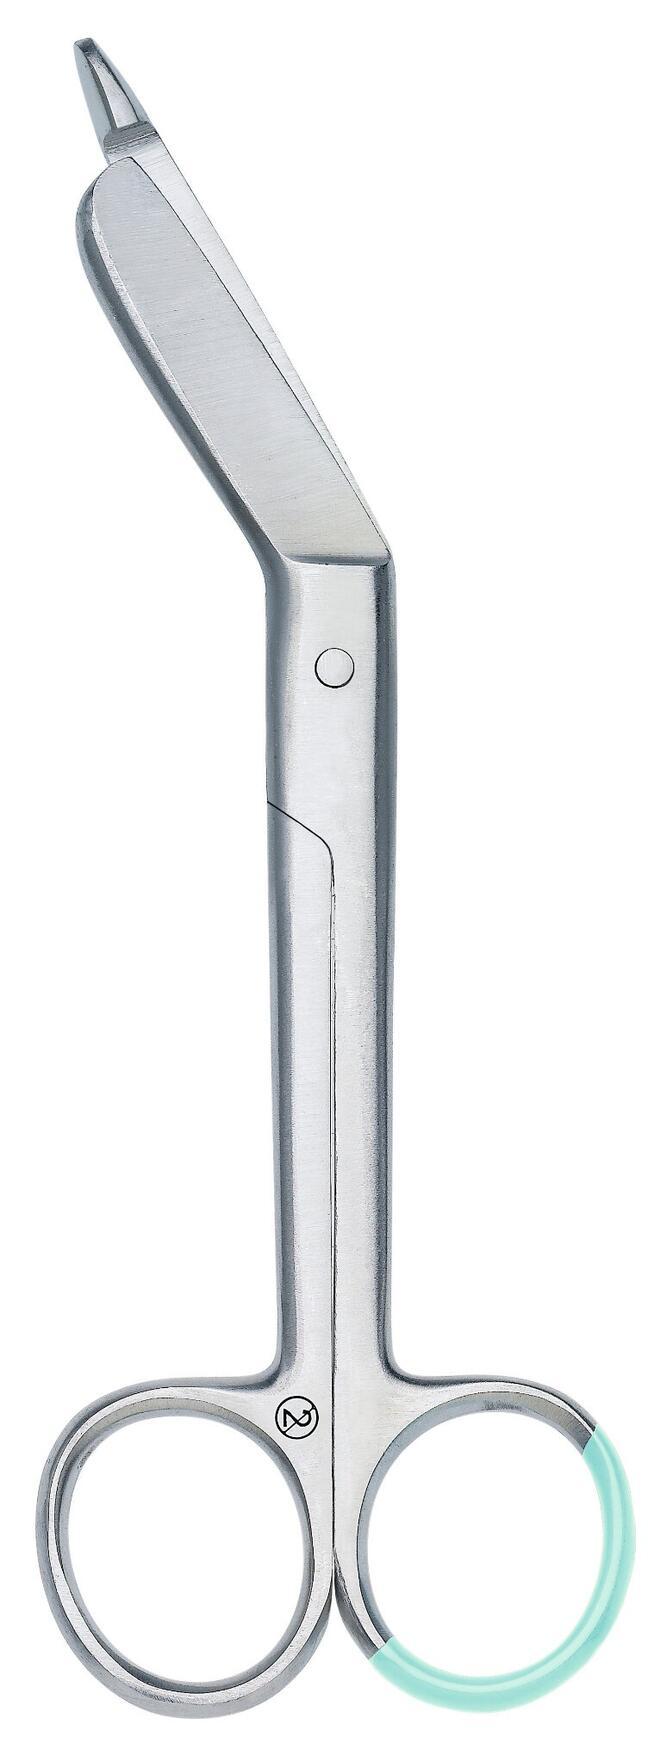 Freckle instrument bandage scissors 16cm